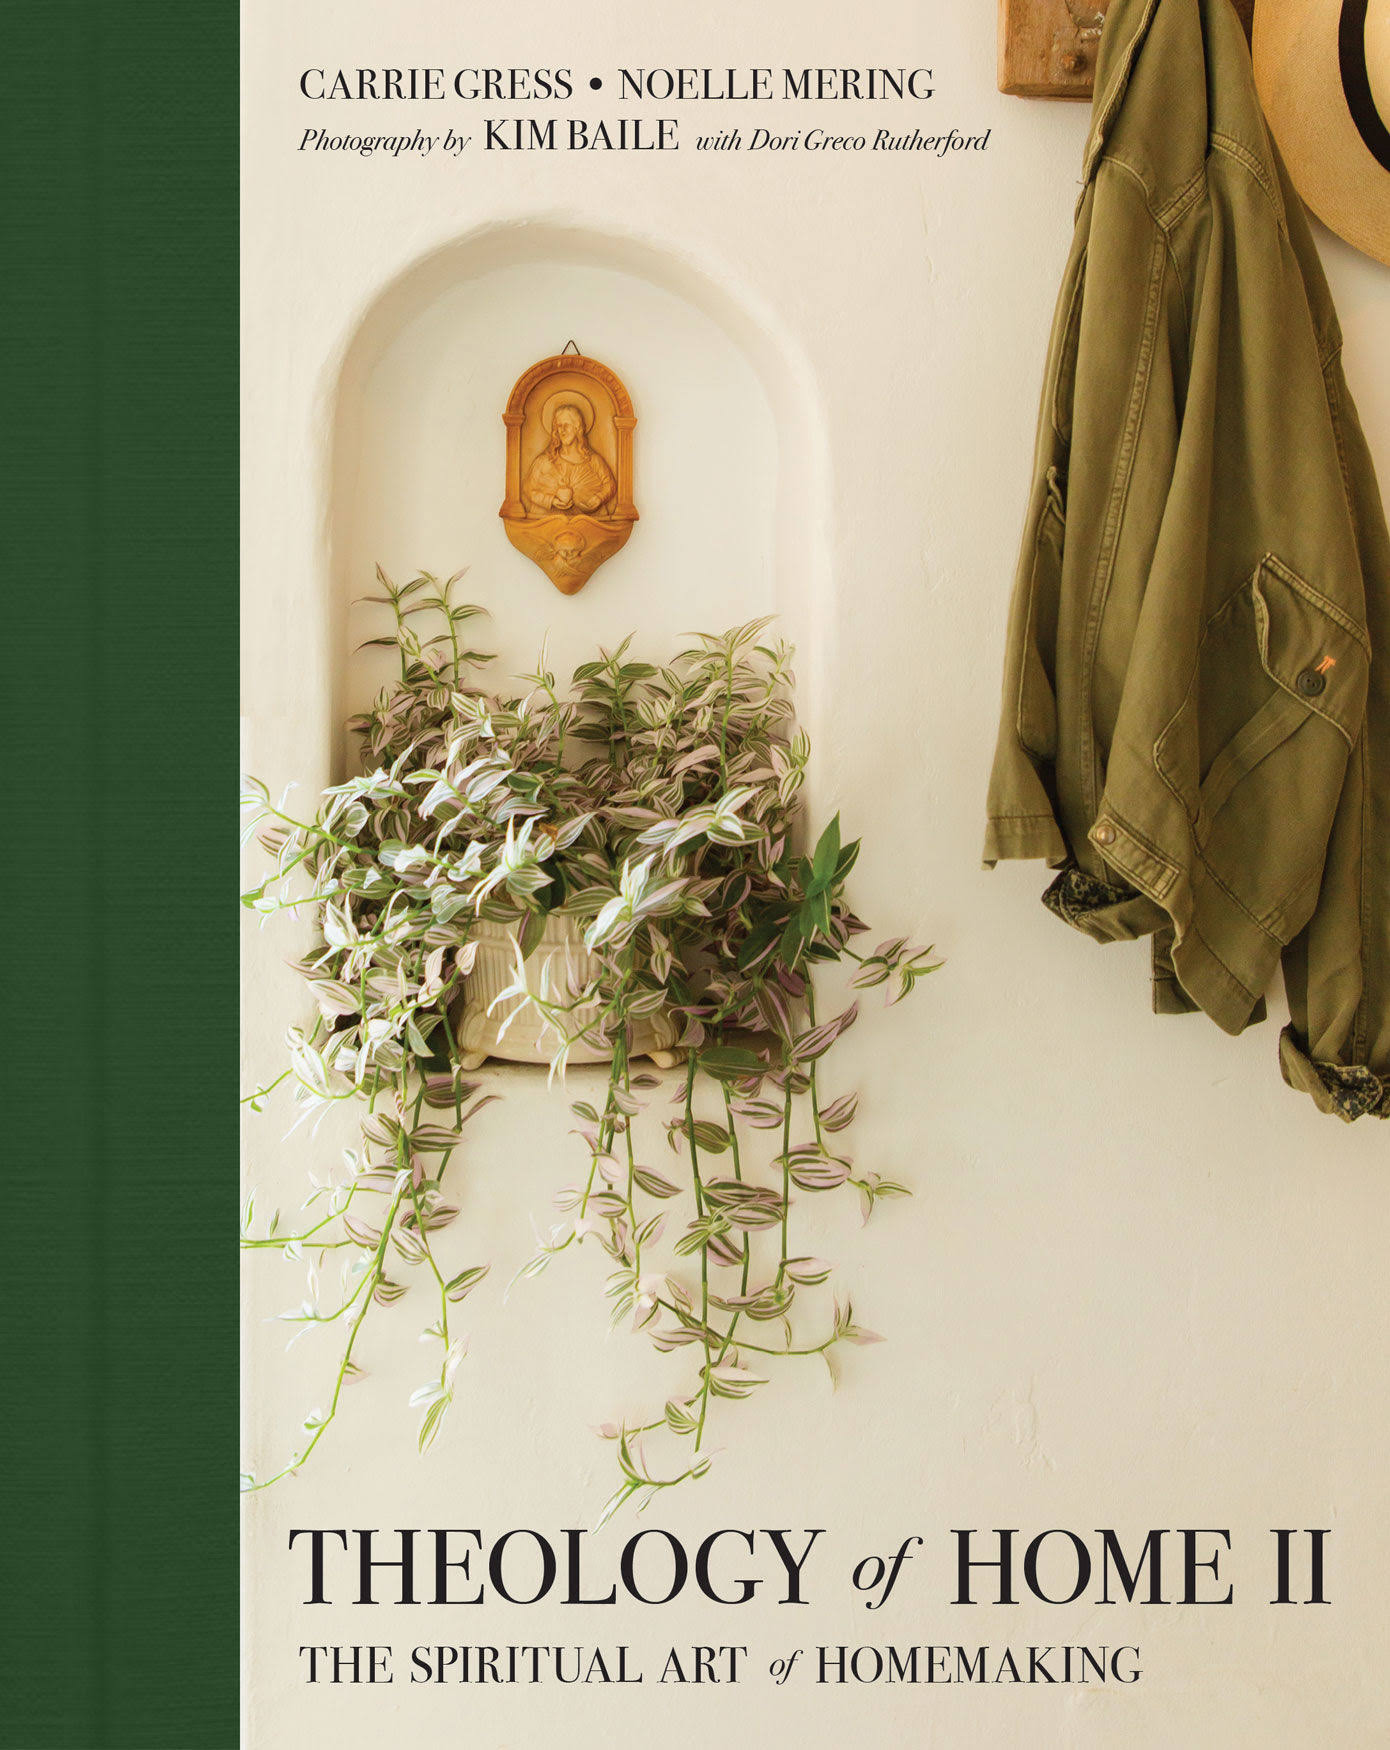 Theology of Home II: The Spiritual Art of Homemaking by Carrie Gress | Hardback | 2020